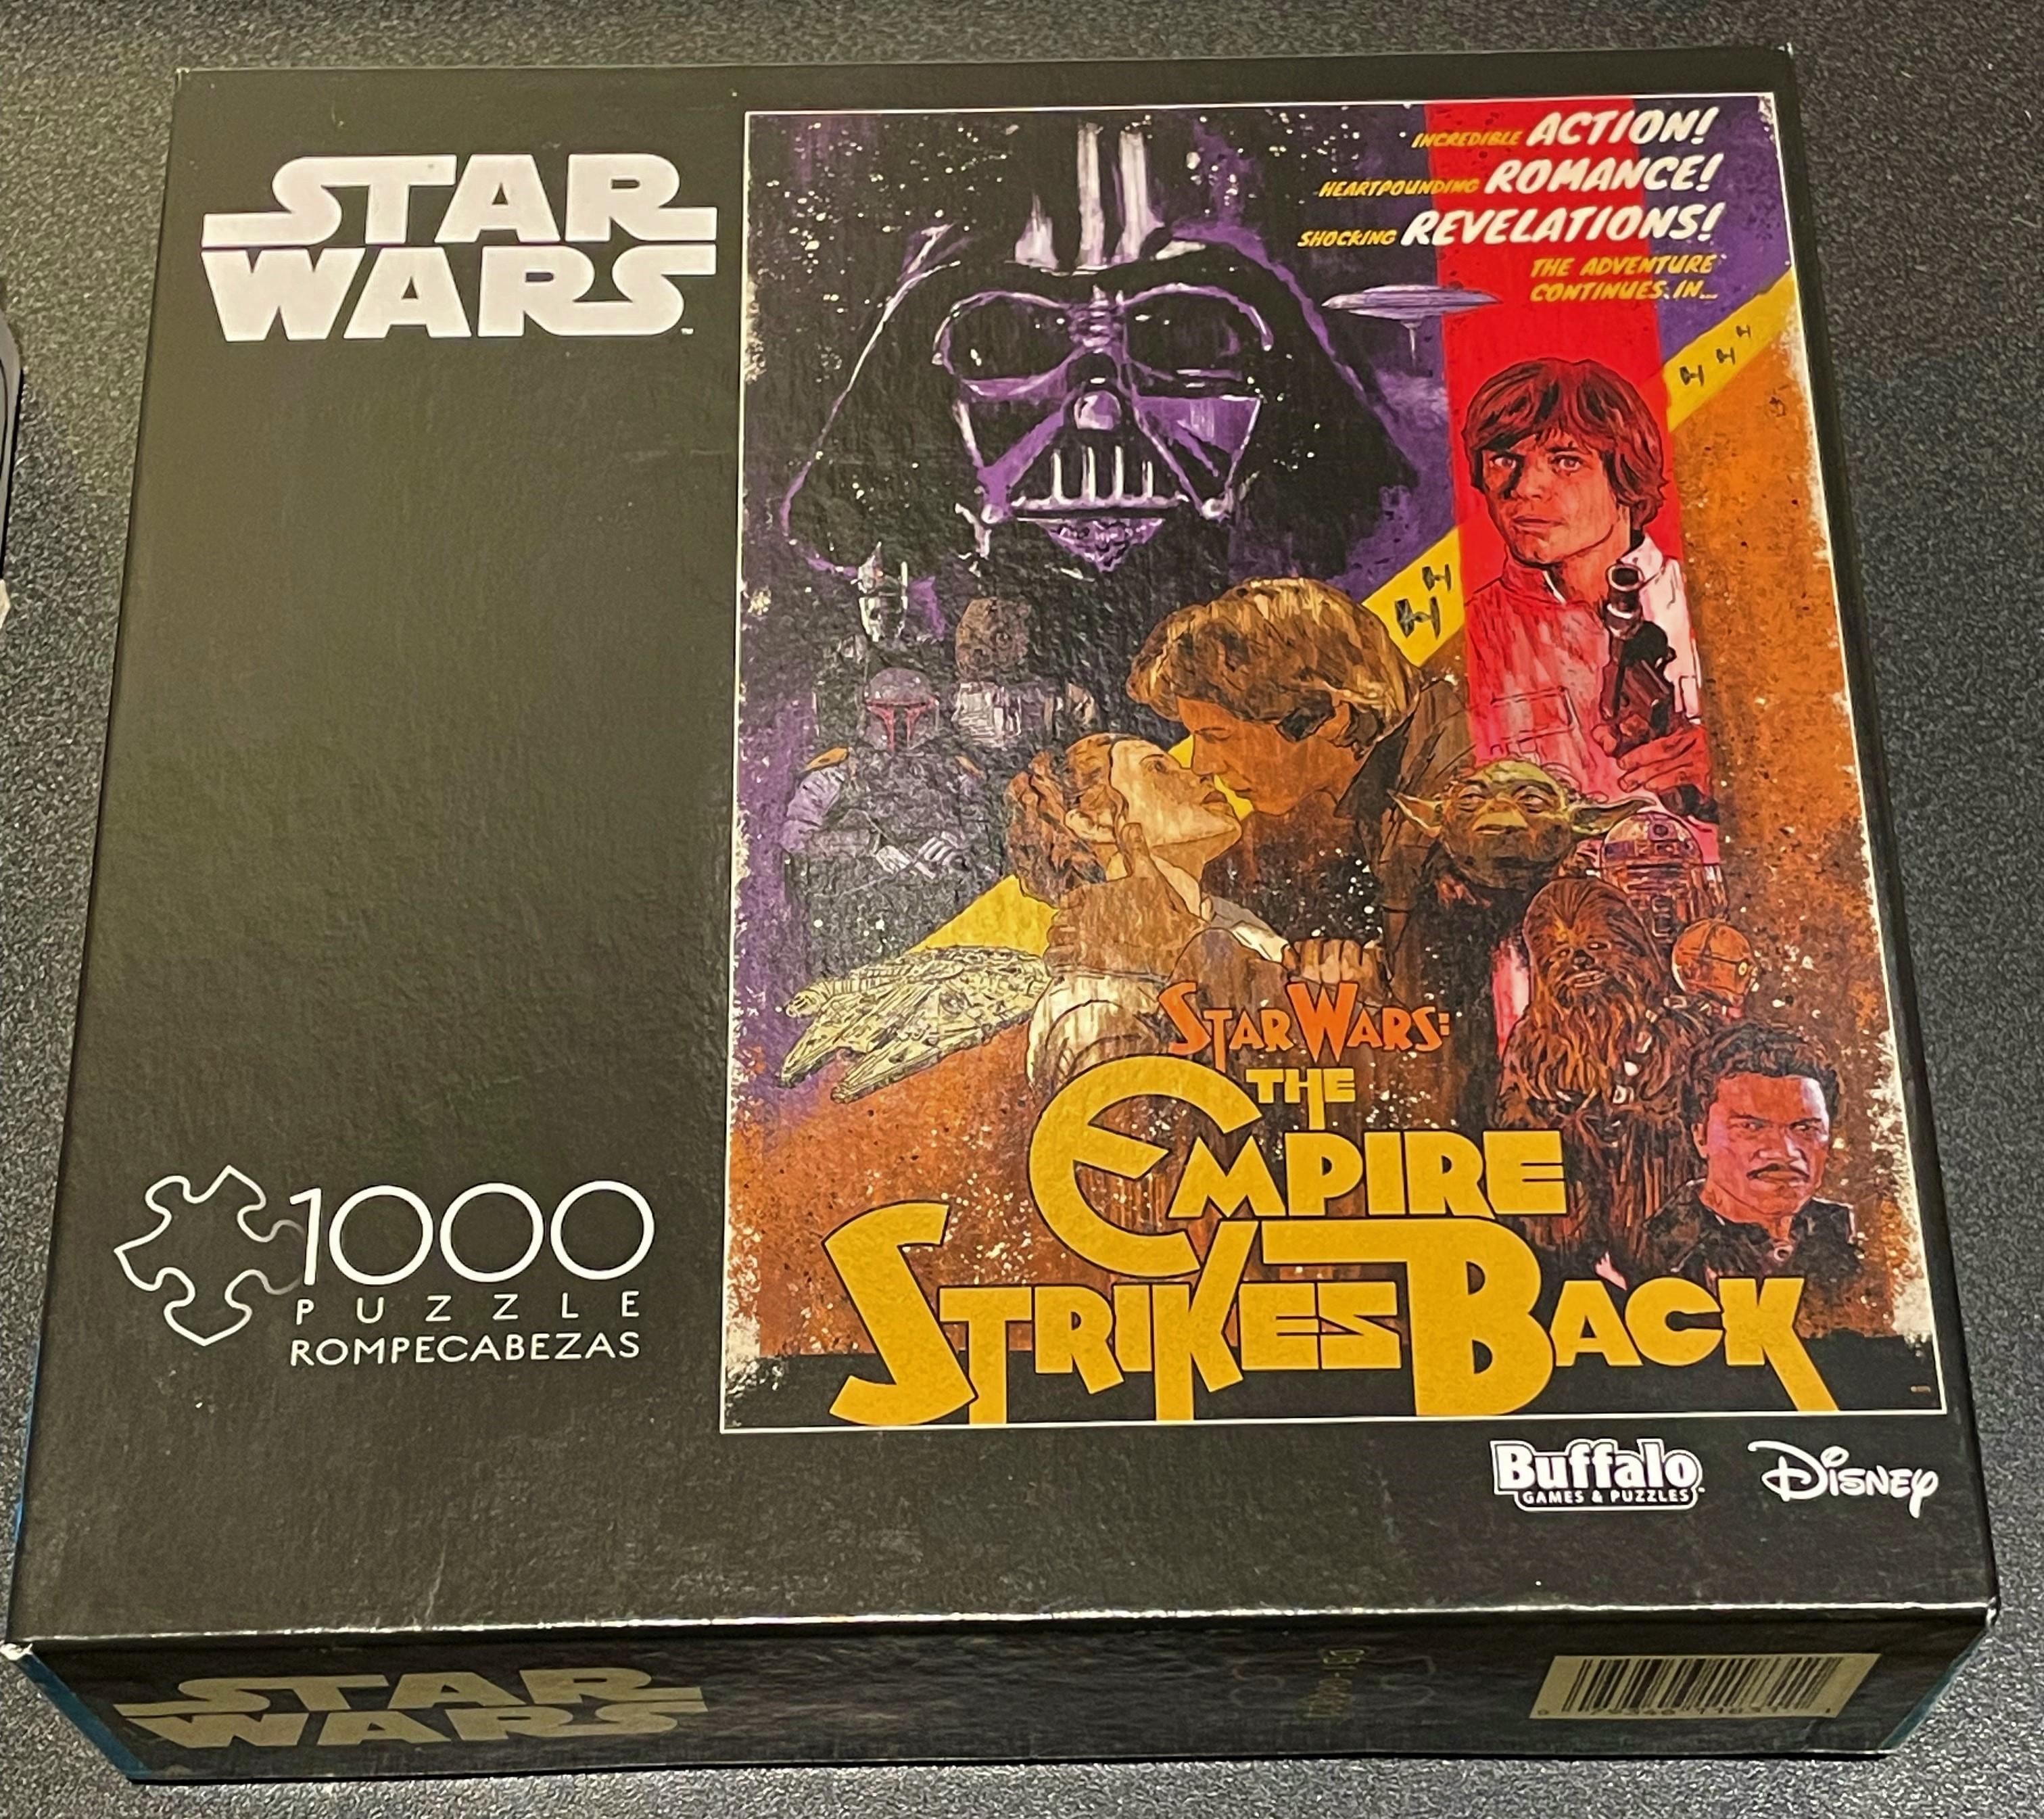 Star Wars The Empire Strikes Back puzzle box